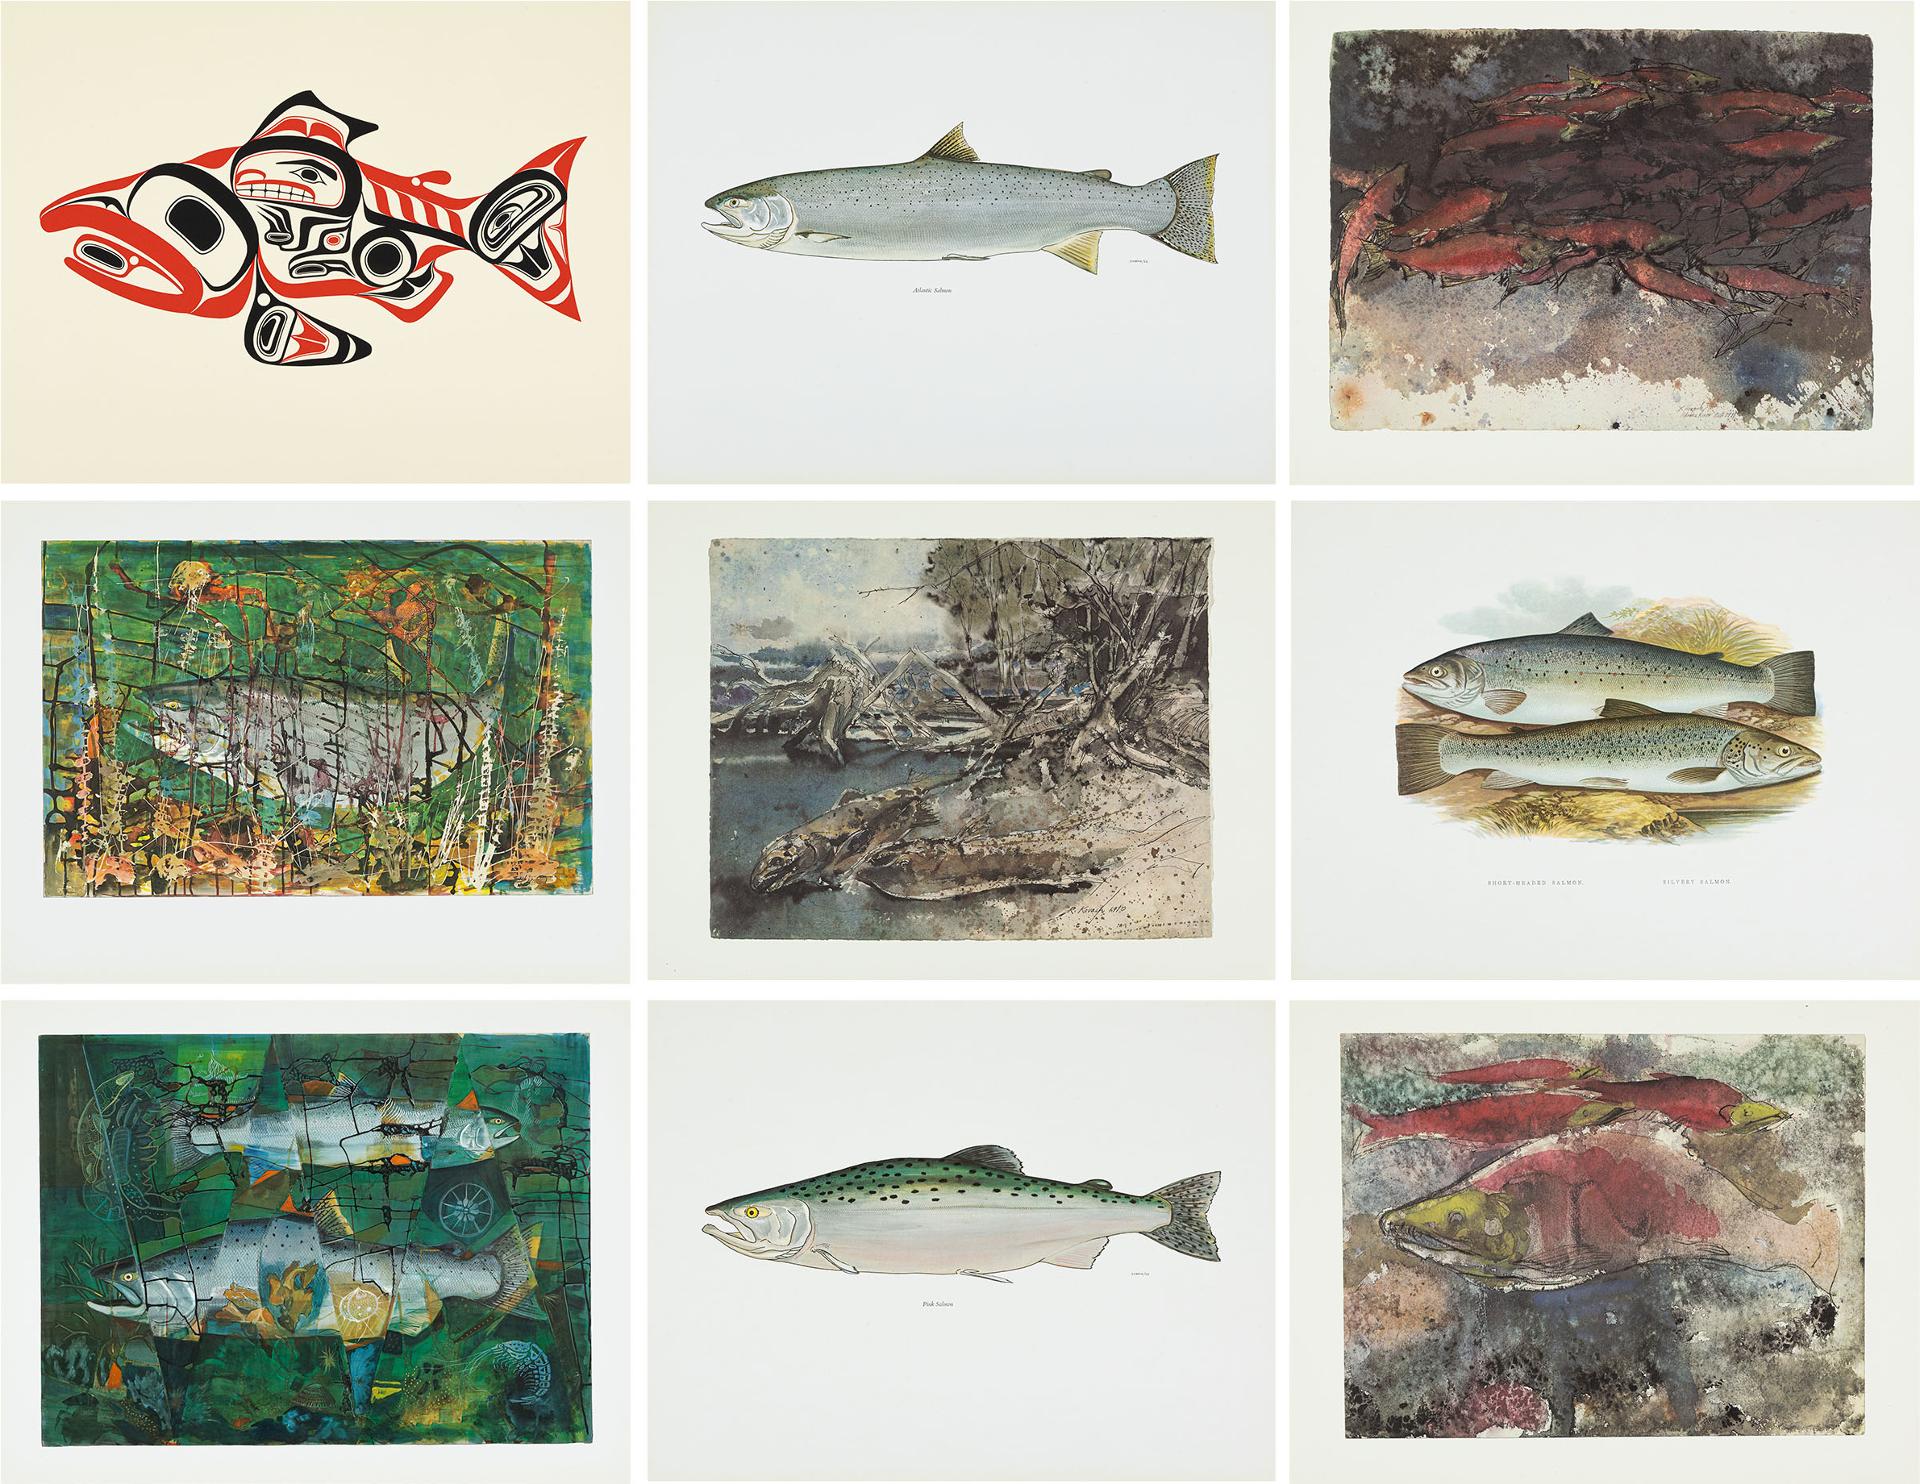 William Ronald (Bill) Reid (1920-1998) - The Salmon - Canada's Plea For A Threatened Species